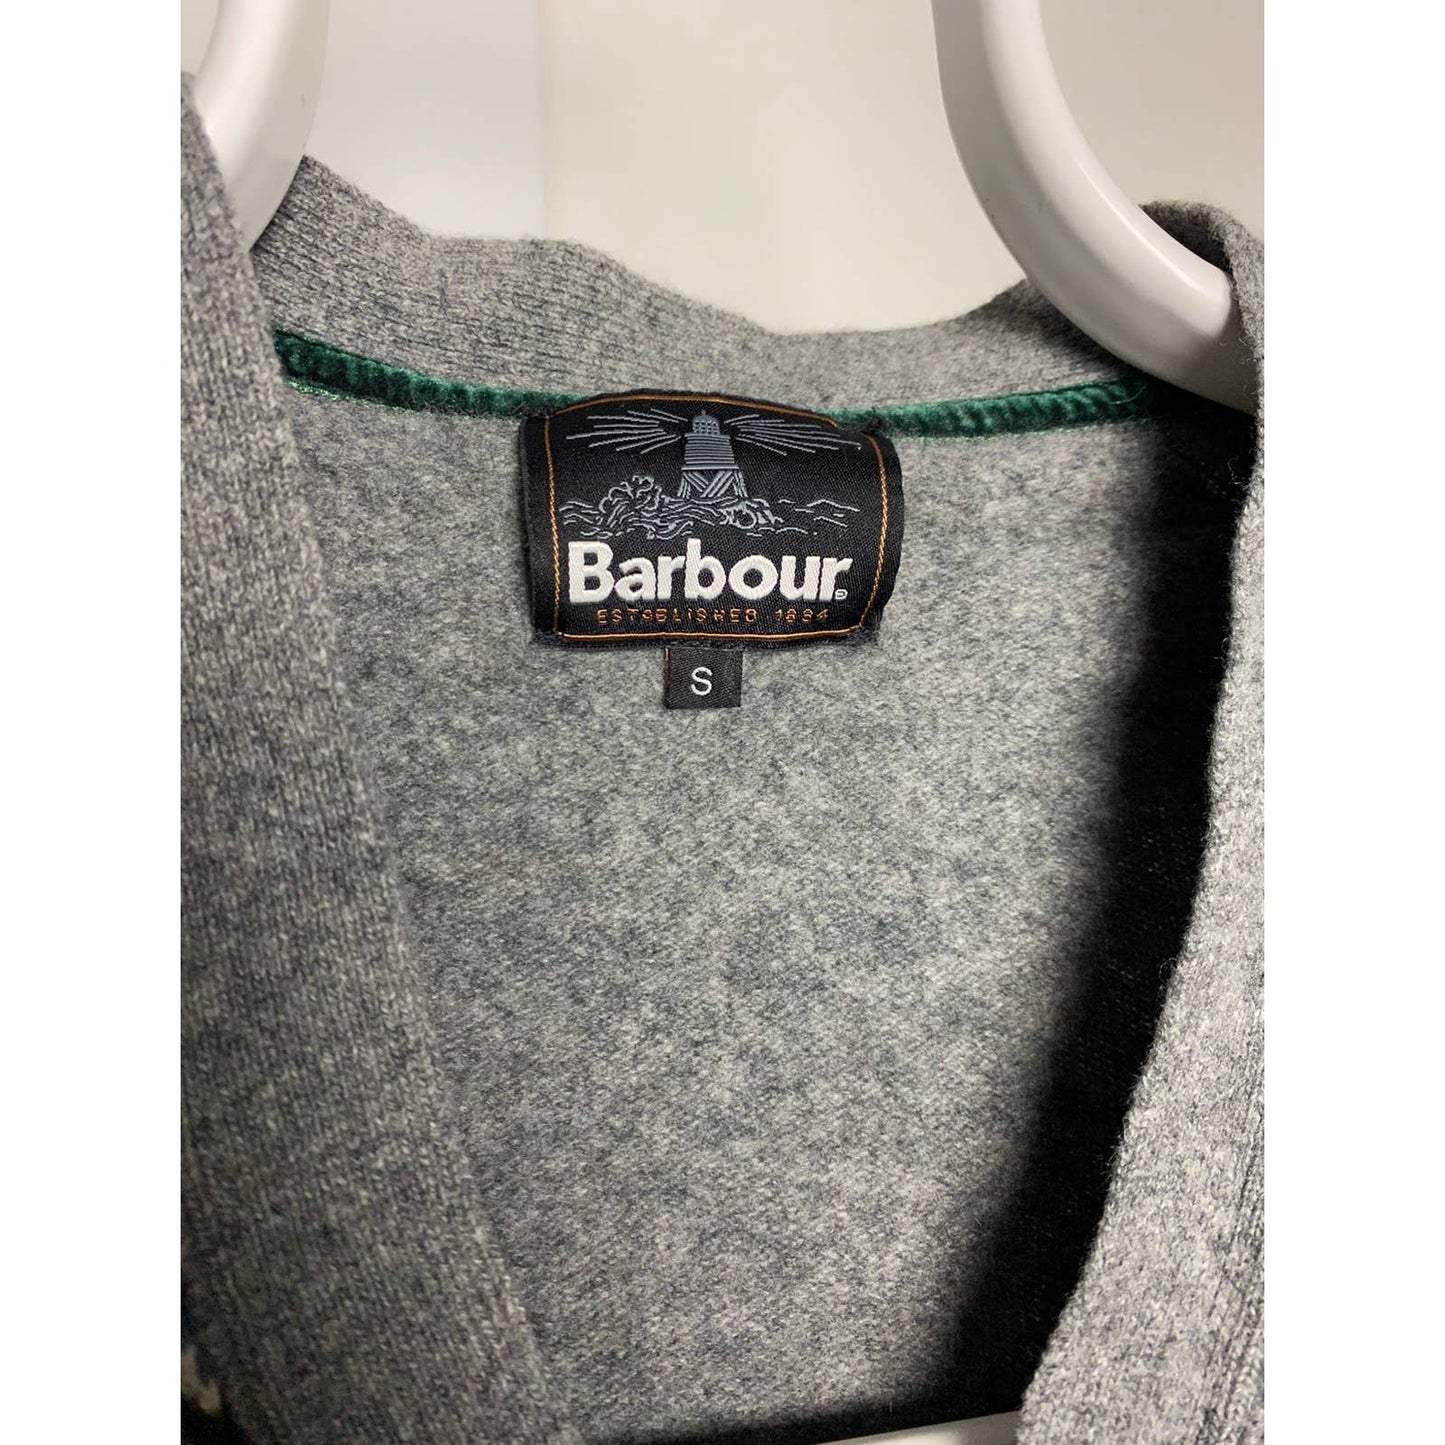 Barbour vintage grey cardigan